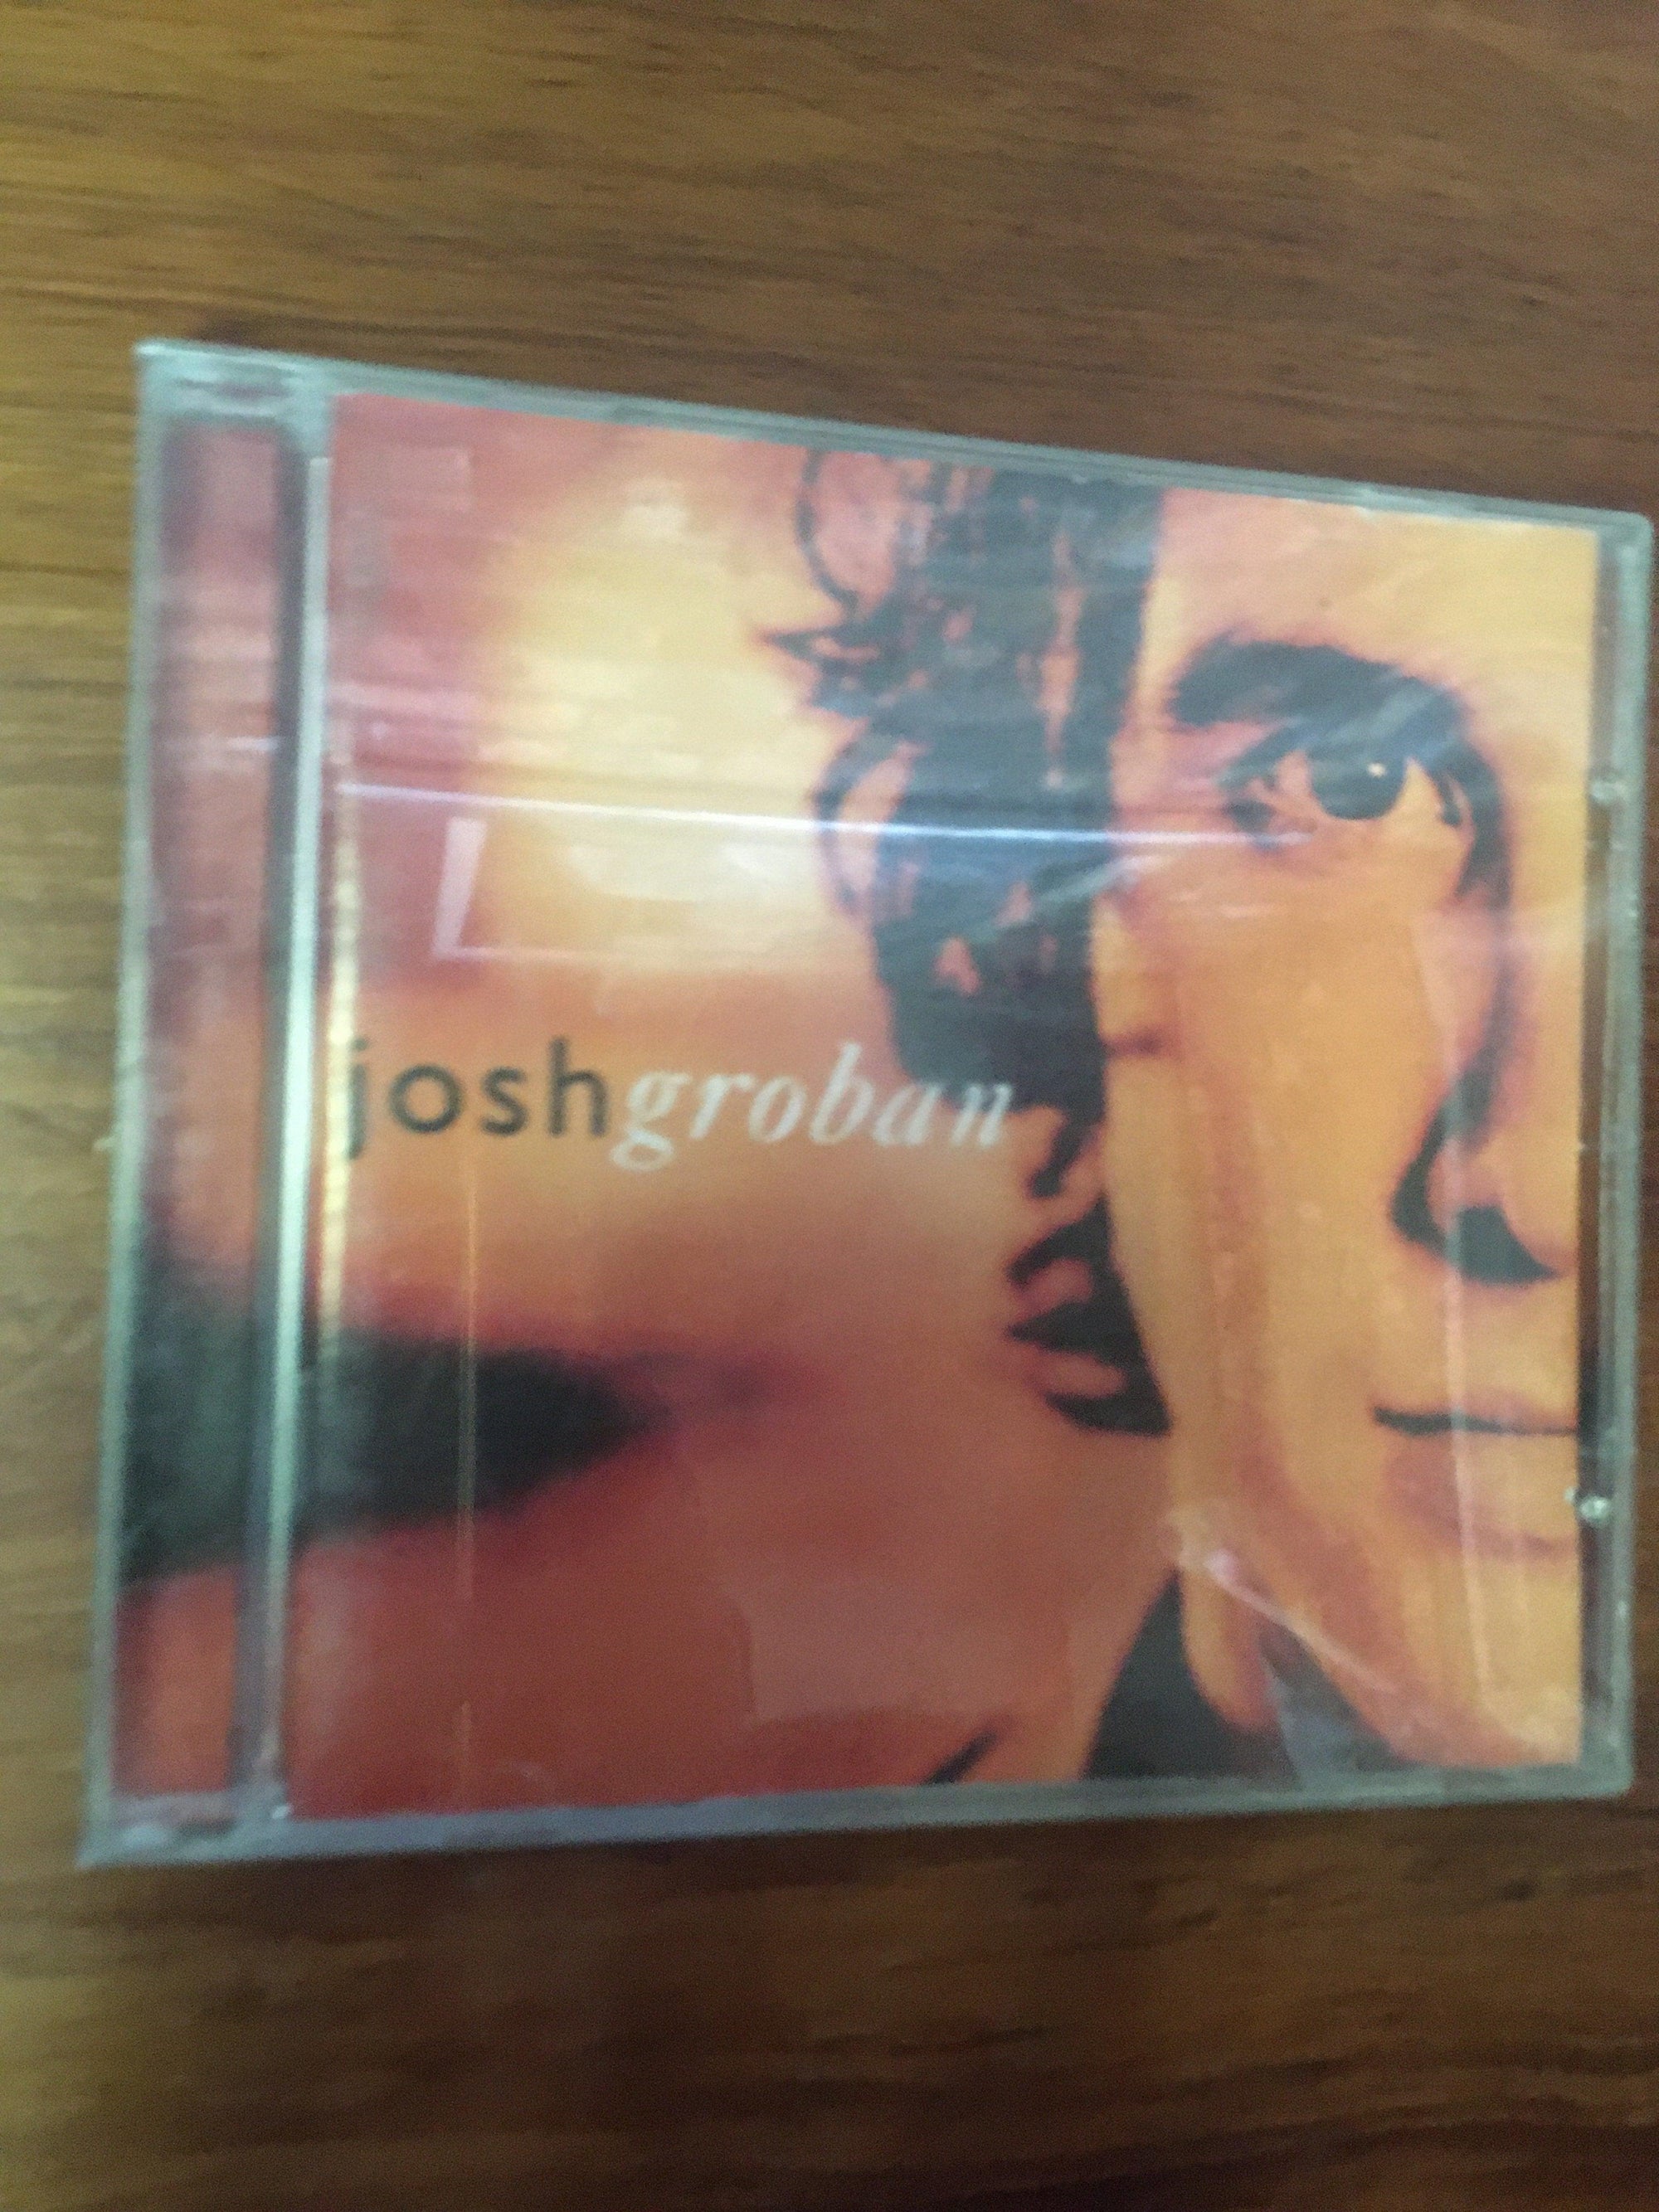 Josh Groban - CD - 2ndhandwarehouse.com